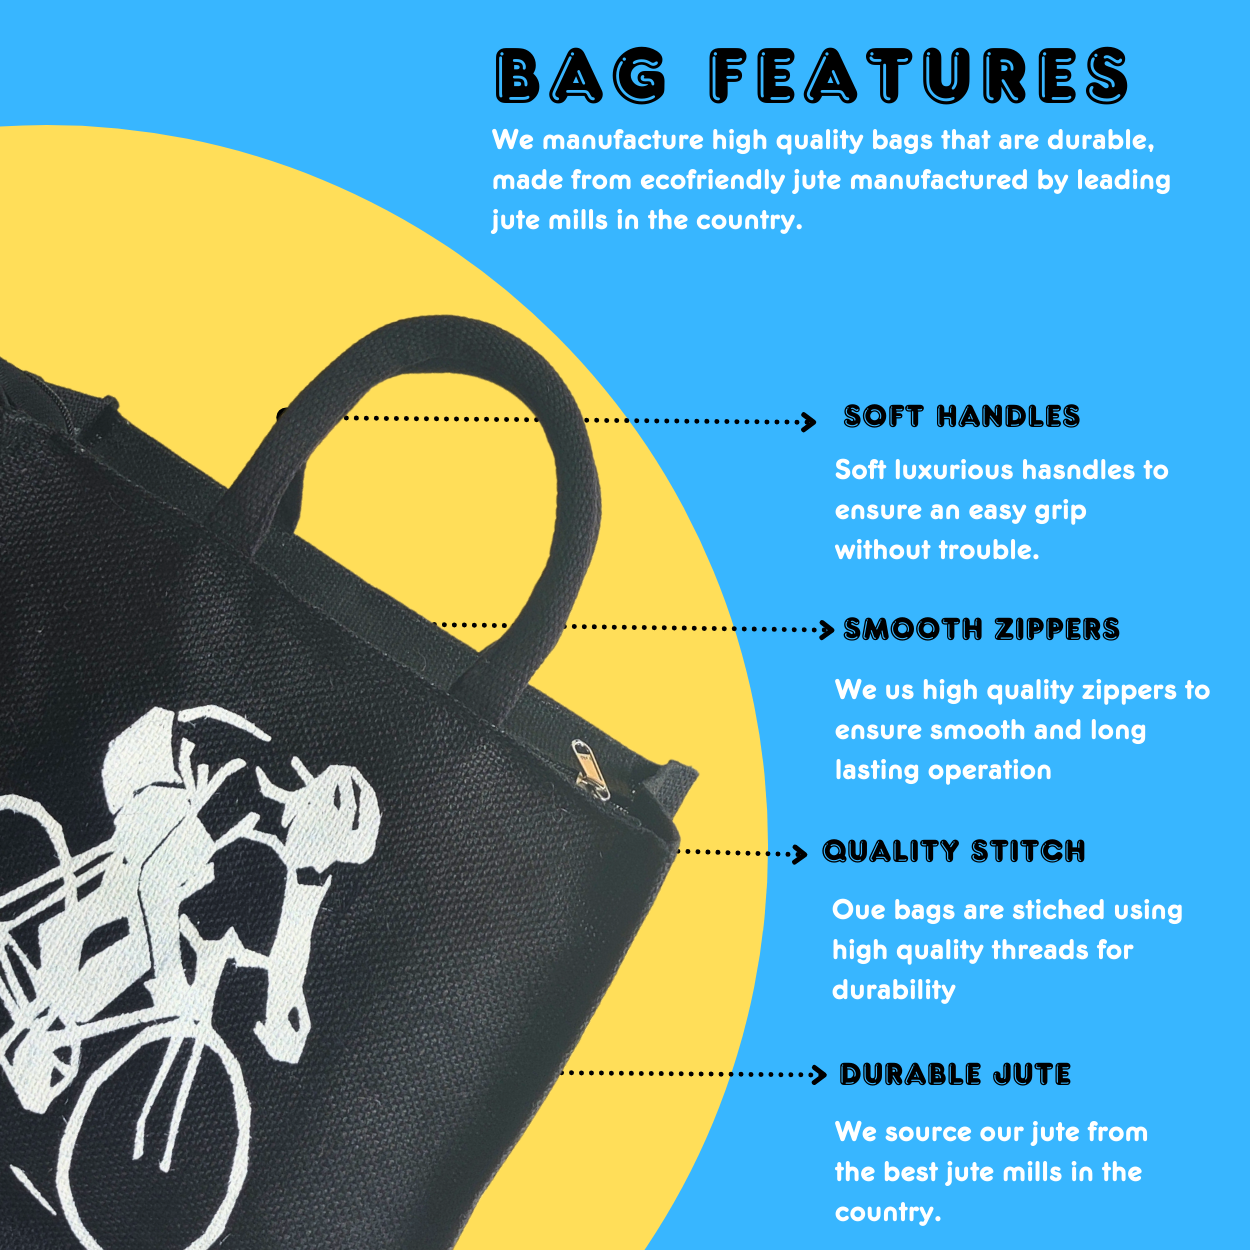 Printed Jute Standard Lunch Bag Cyclist Black Body